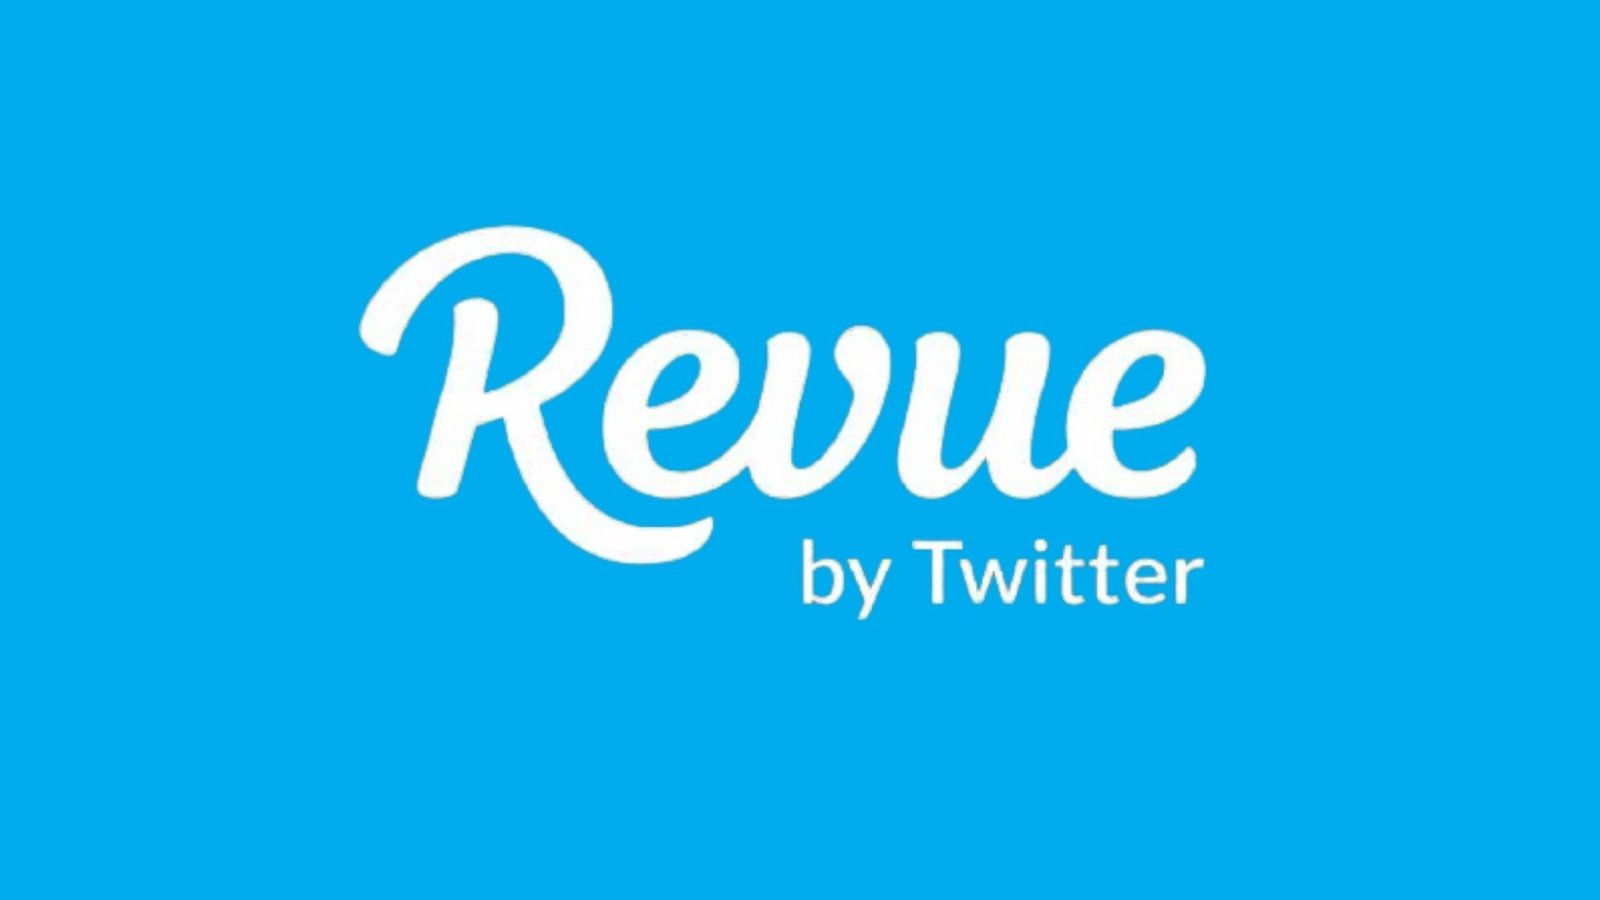 twitter acquires revue